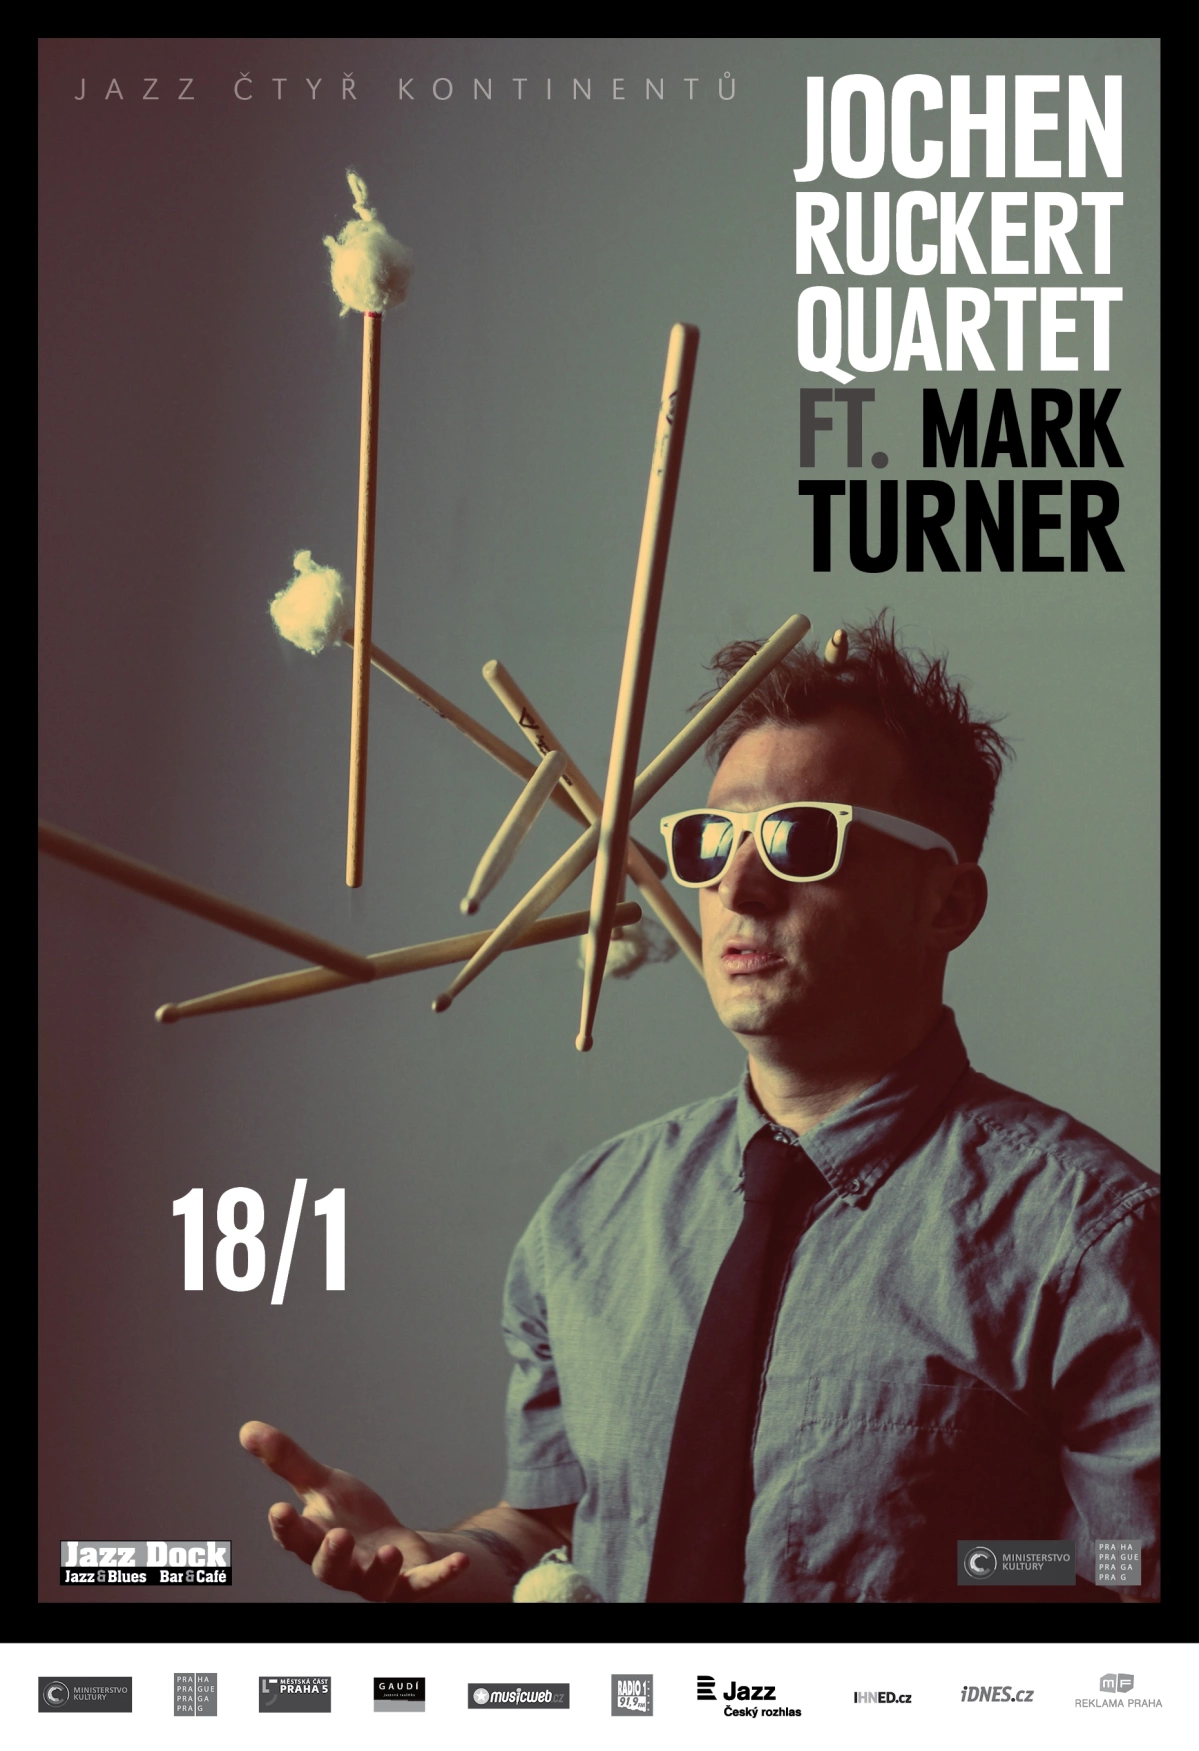 JAZZ ČTYŘ KONTINENTŮ:Jochen Ruckert Quartet ft. Mark Turner (USA/D)